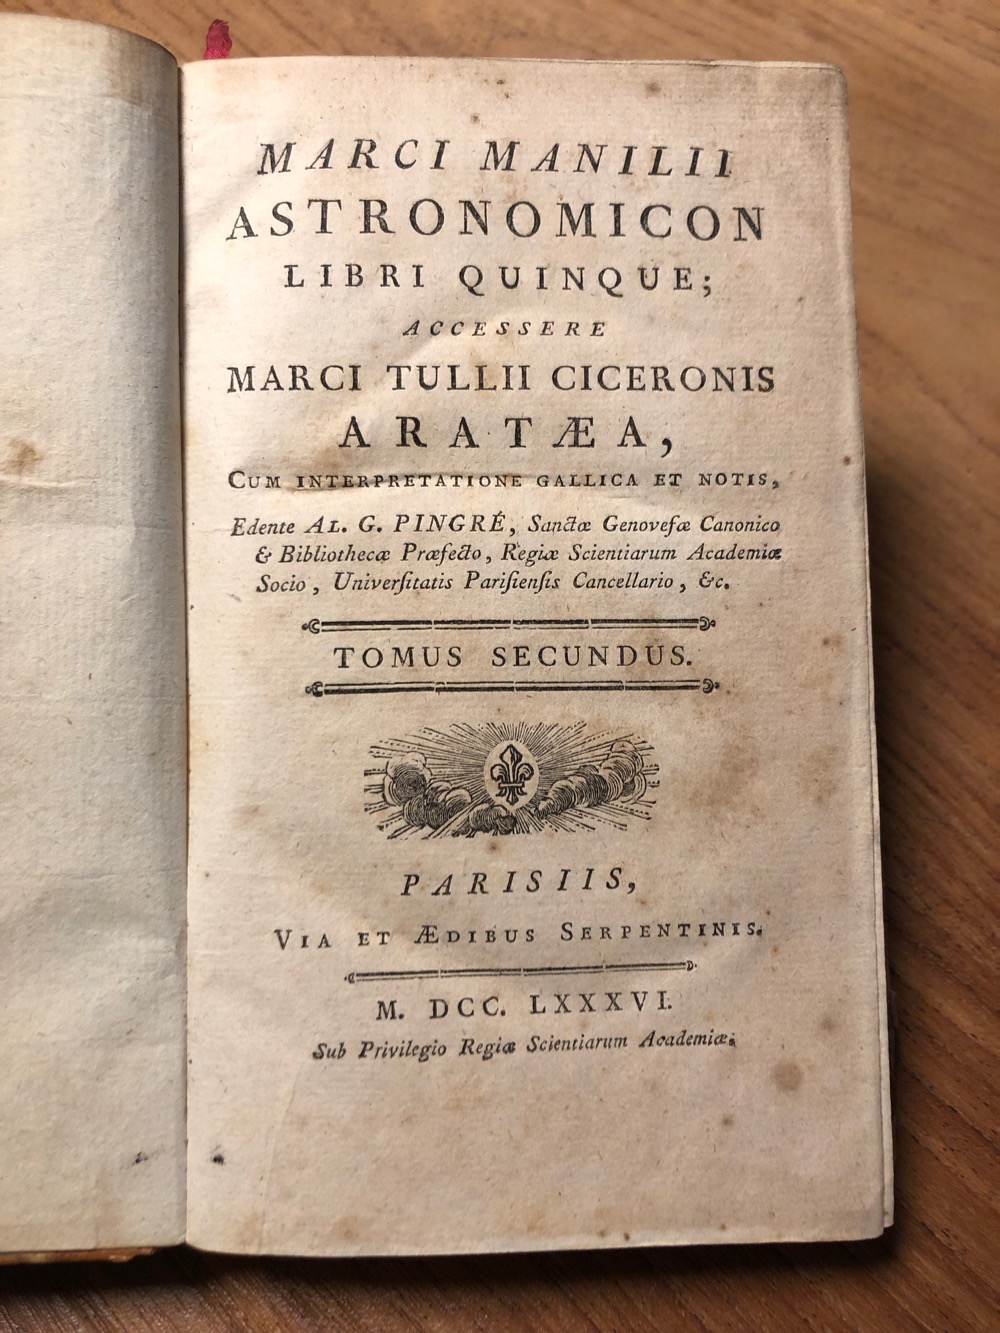 Je bekijkt nu Marci Manilii Astronomicon libri quinque – 1786